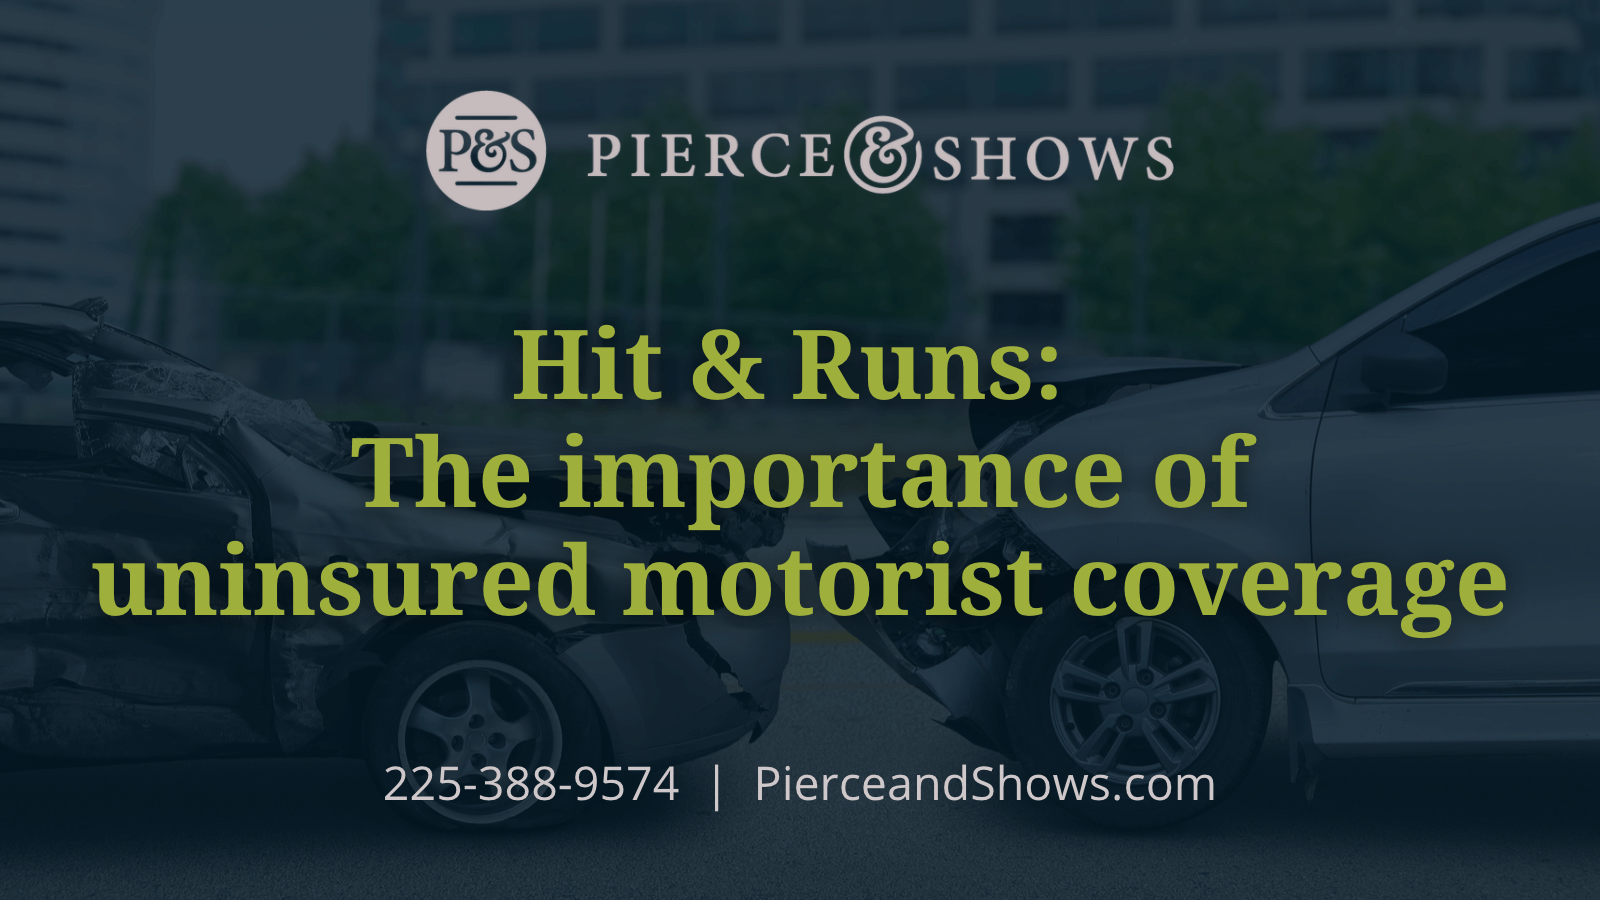 Hit & Run uninsured motorist coverage - Baton Rouge Louisiana injury attorney Pierce & Shows